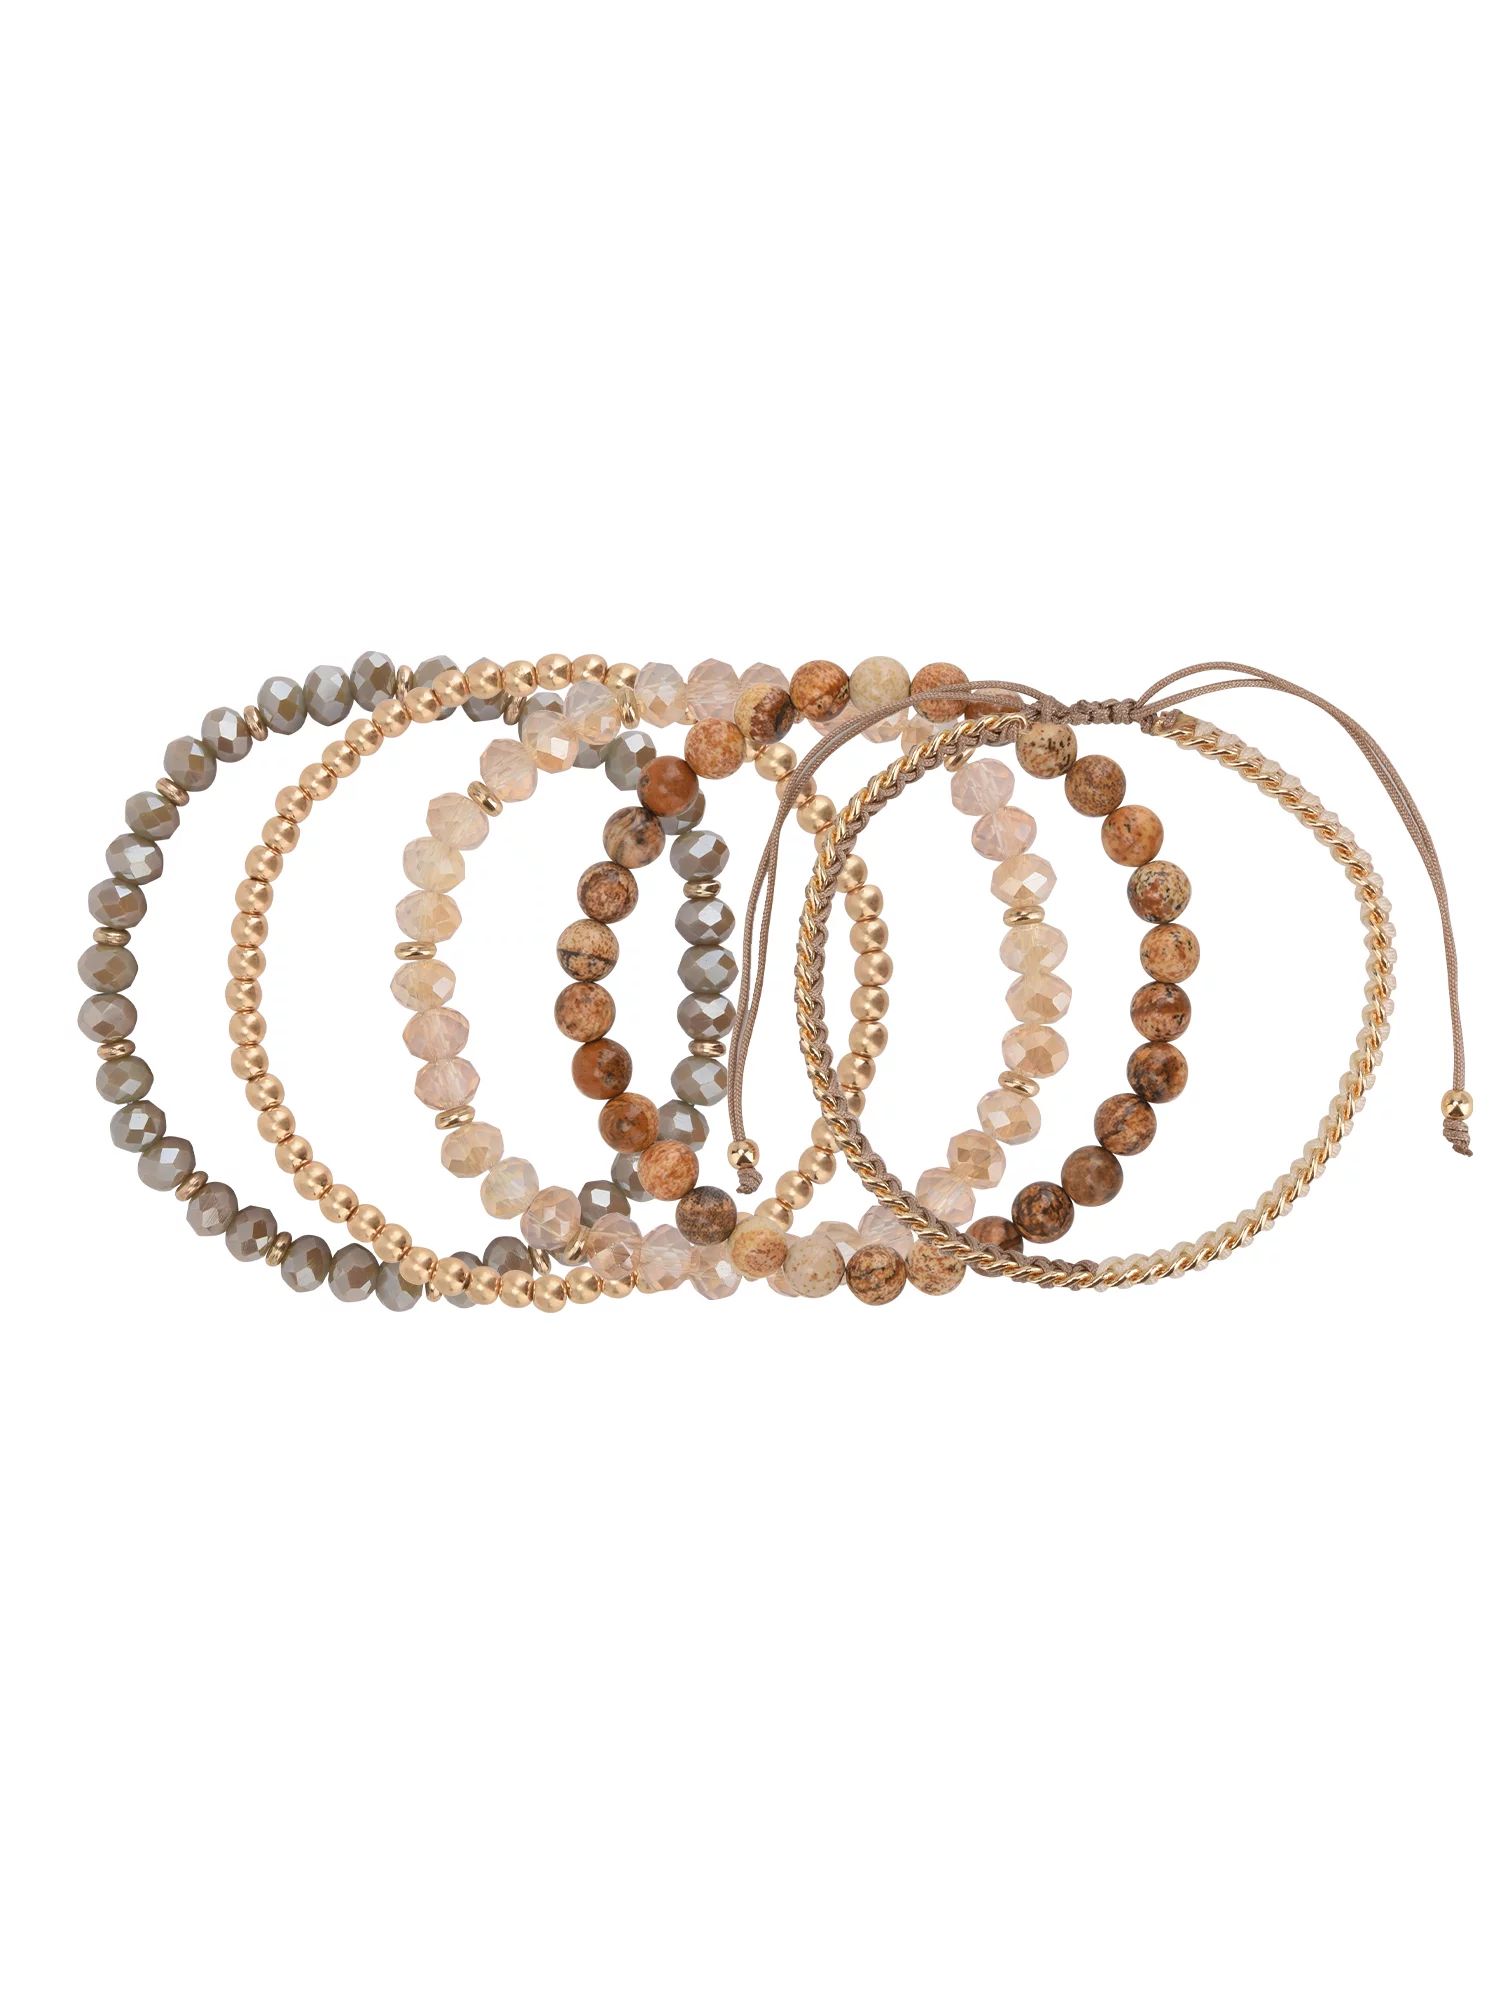 The Pioneer Woman - Women's Jewelry, Soft Gold-tone Bracelet Set with Genuine Stone Beads | Walmart (US)